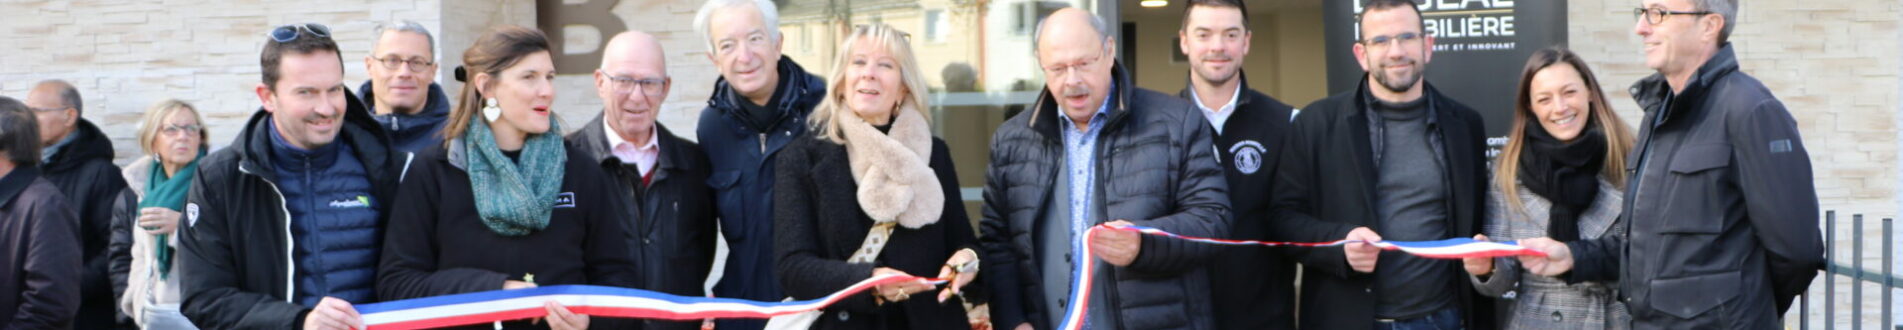 Inauguration Le Parvis Mesnil Esnard